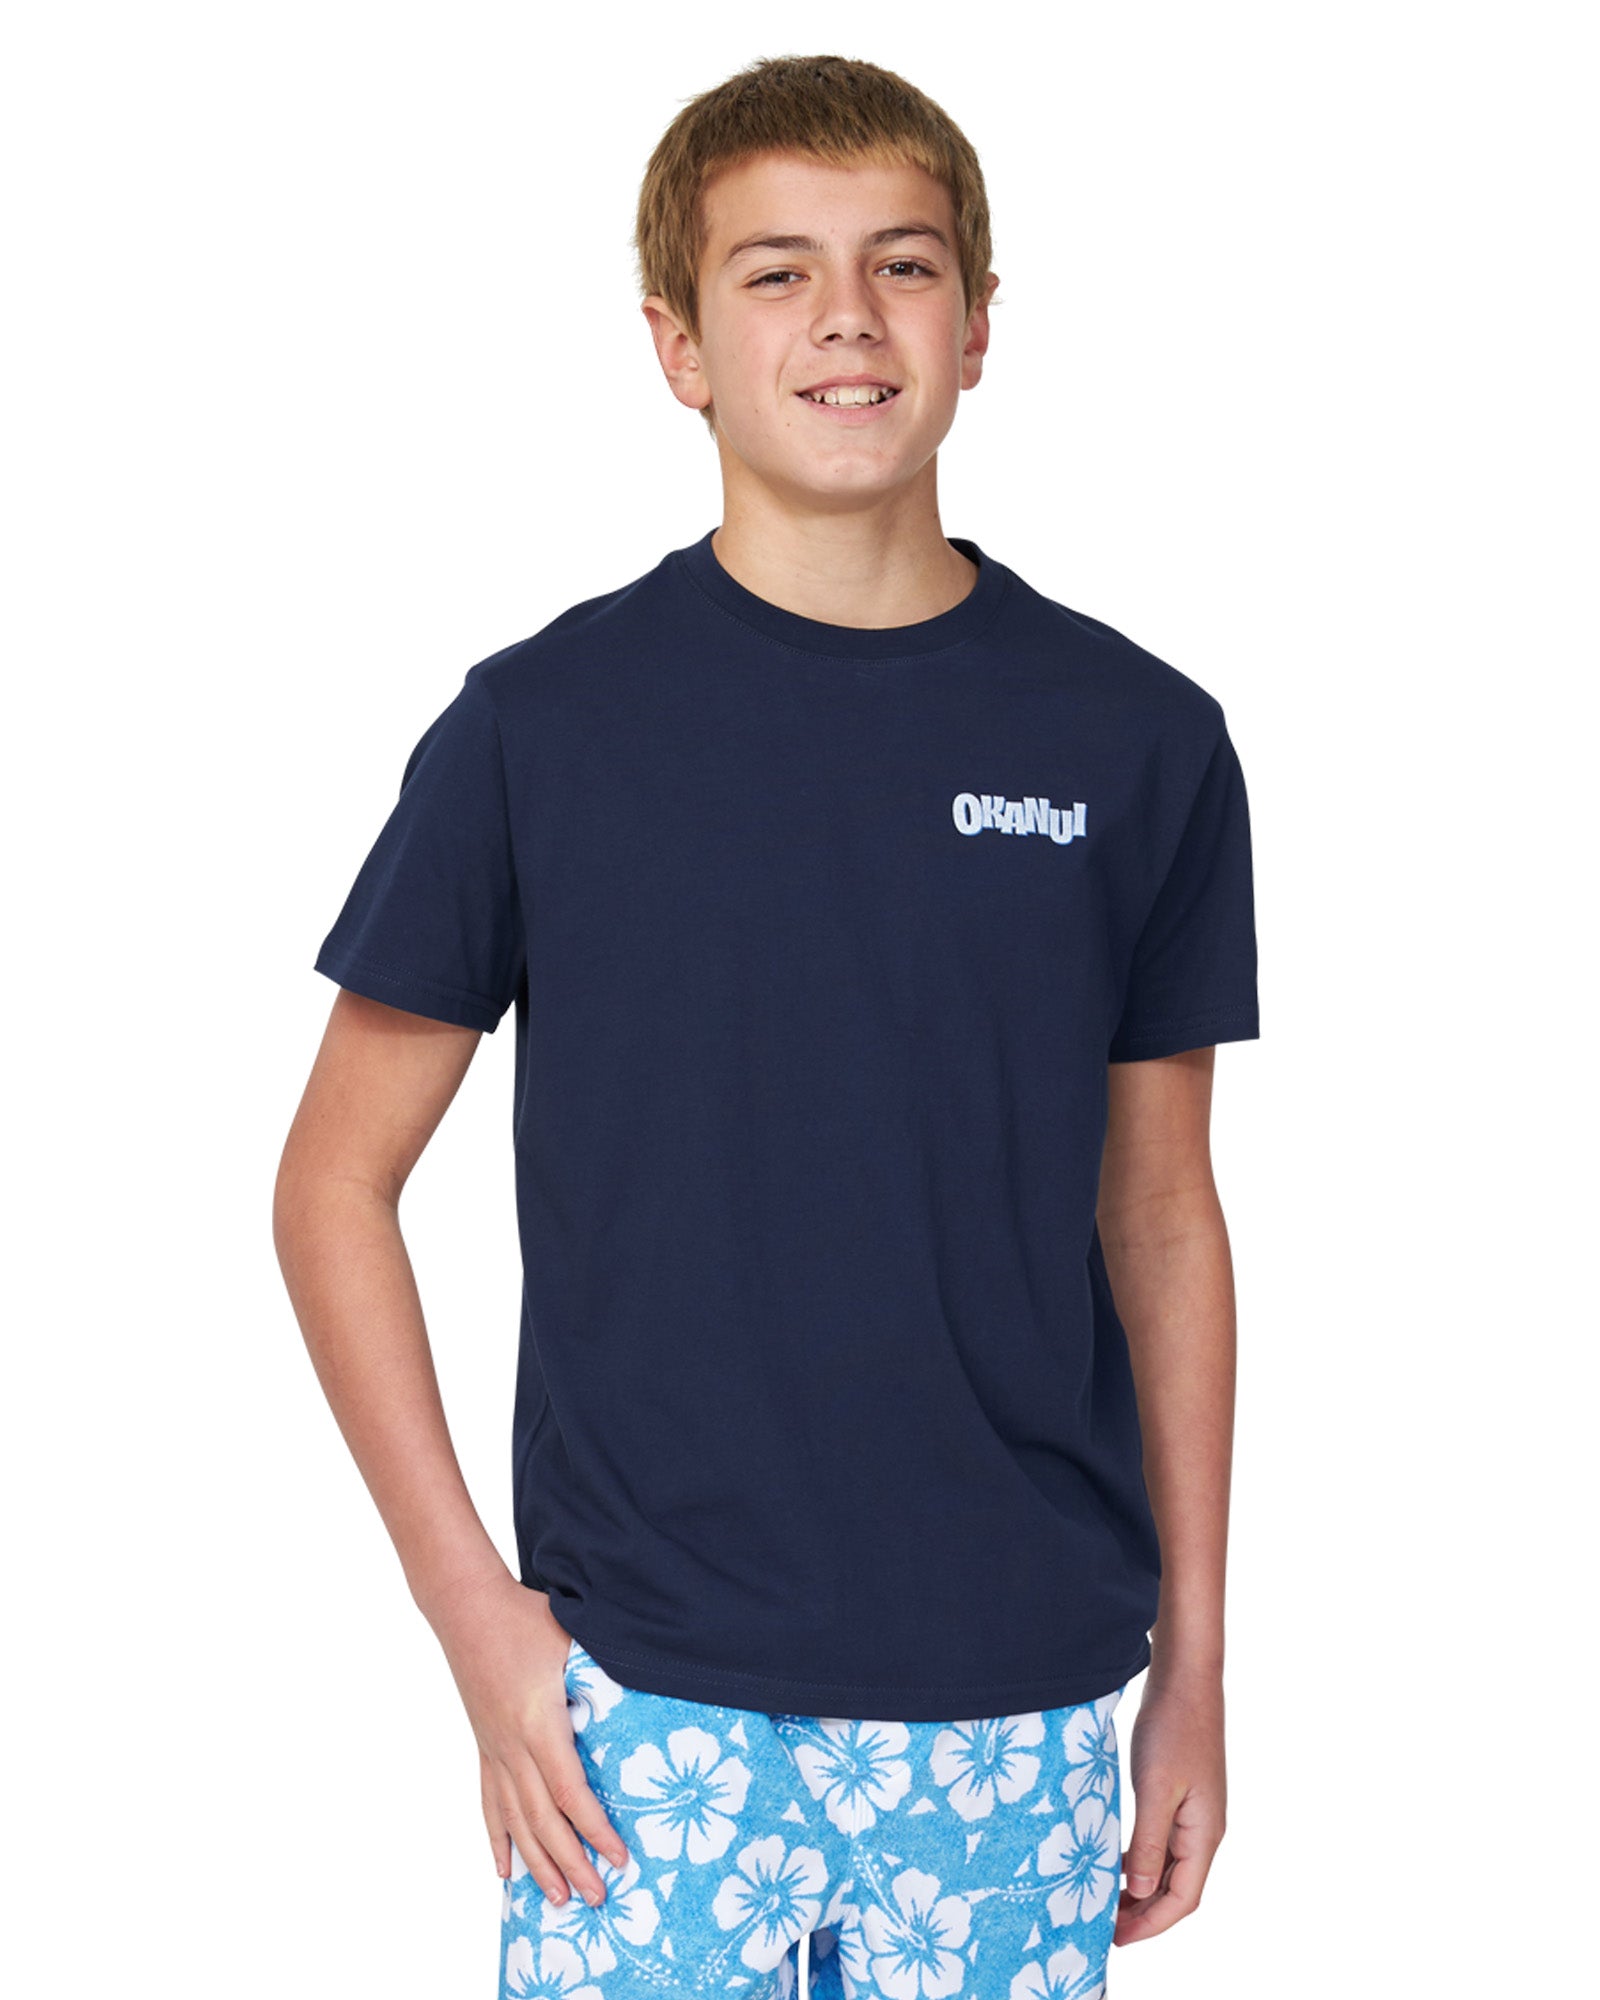 Boys - T-Shirt - Biskus - Navy